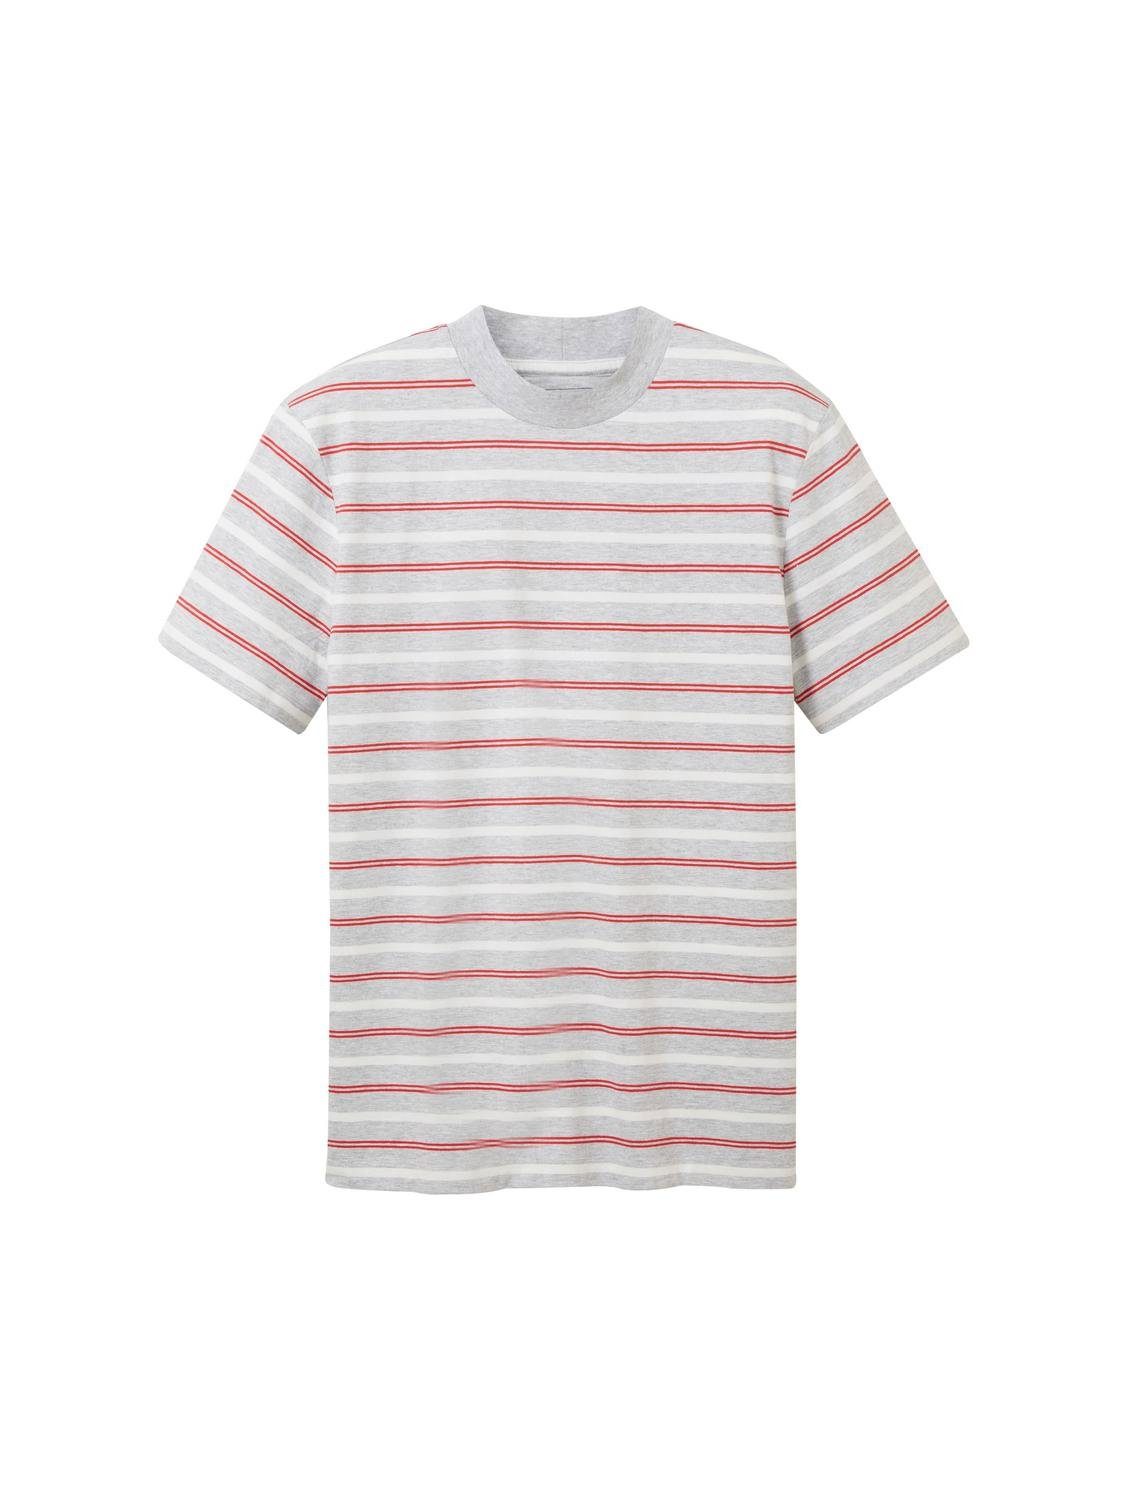 TOM TAILOR Denim T-Shirt striped t-shirt